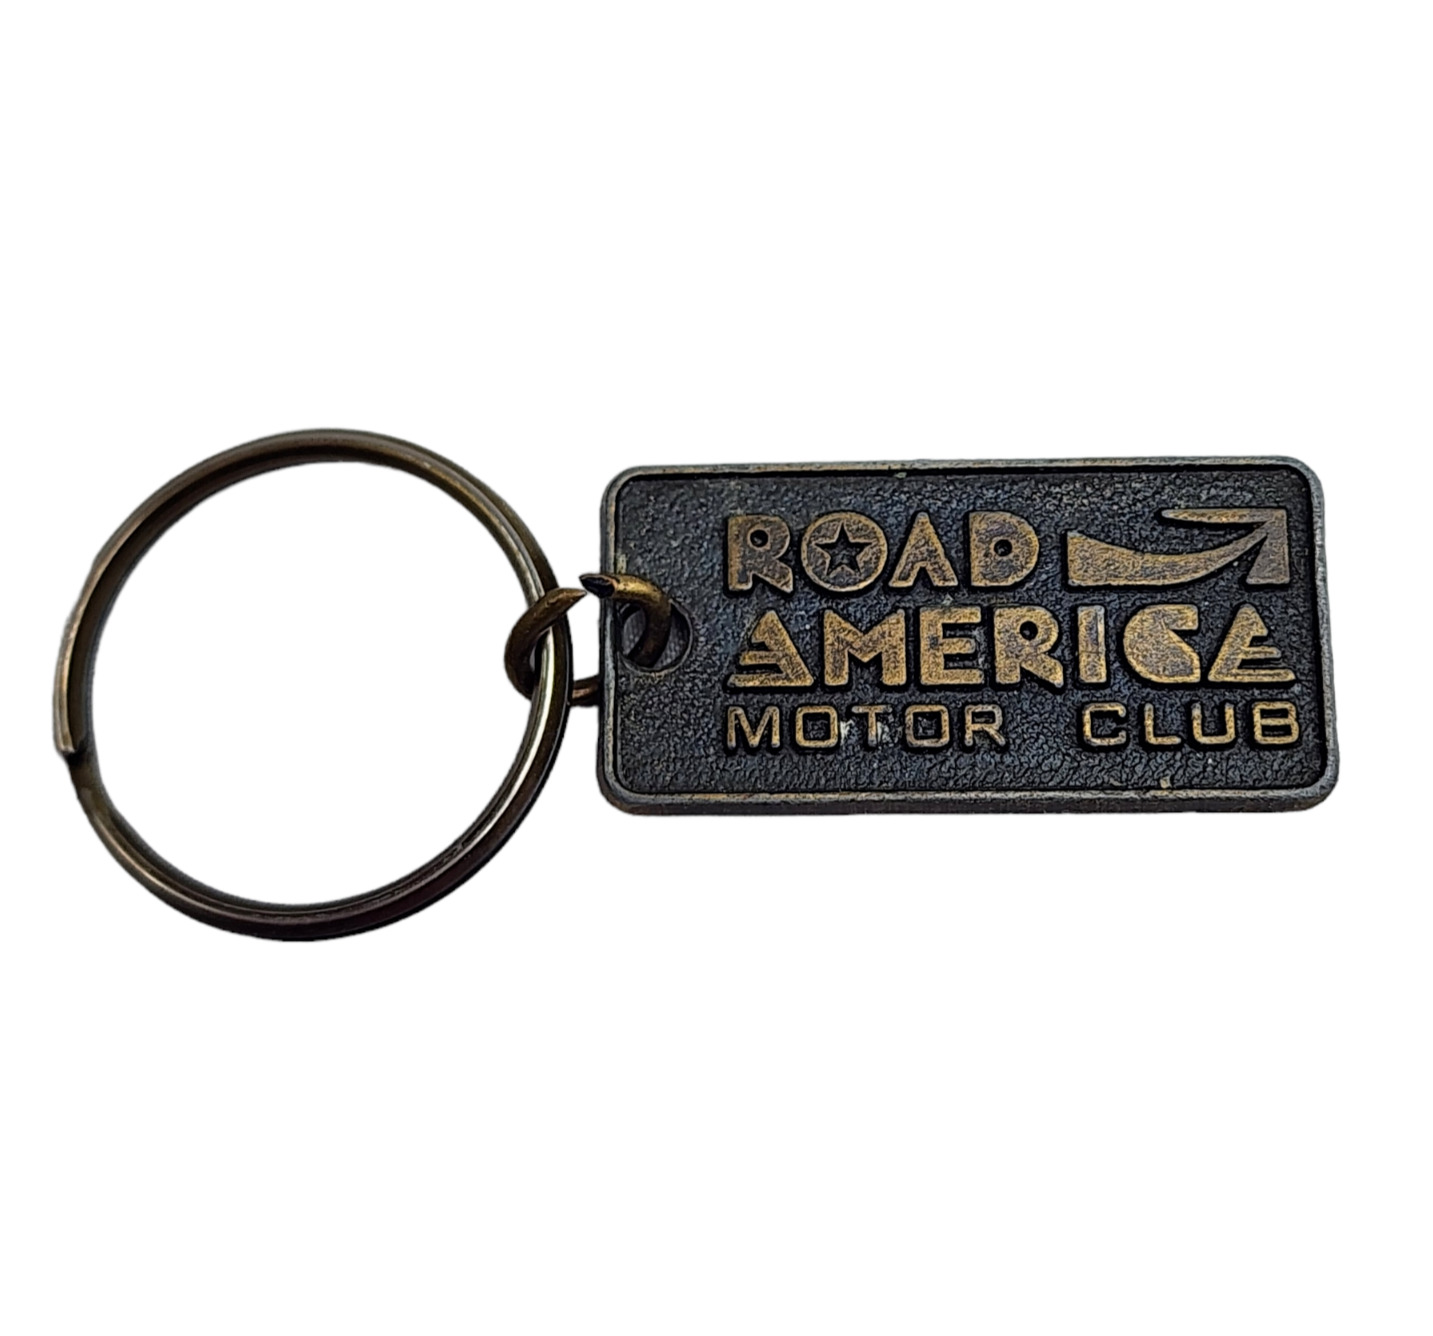 Coral Gables Florida Road America Motor Club Key Chain